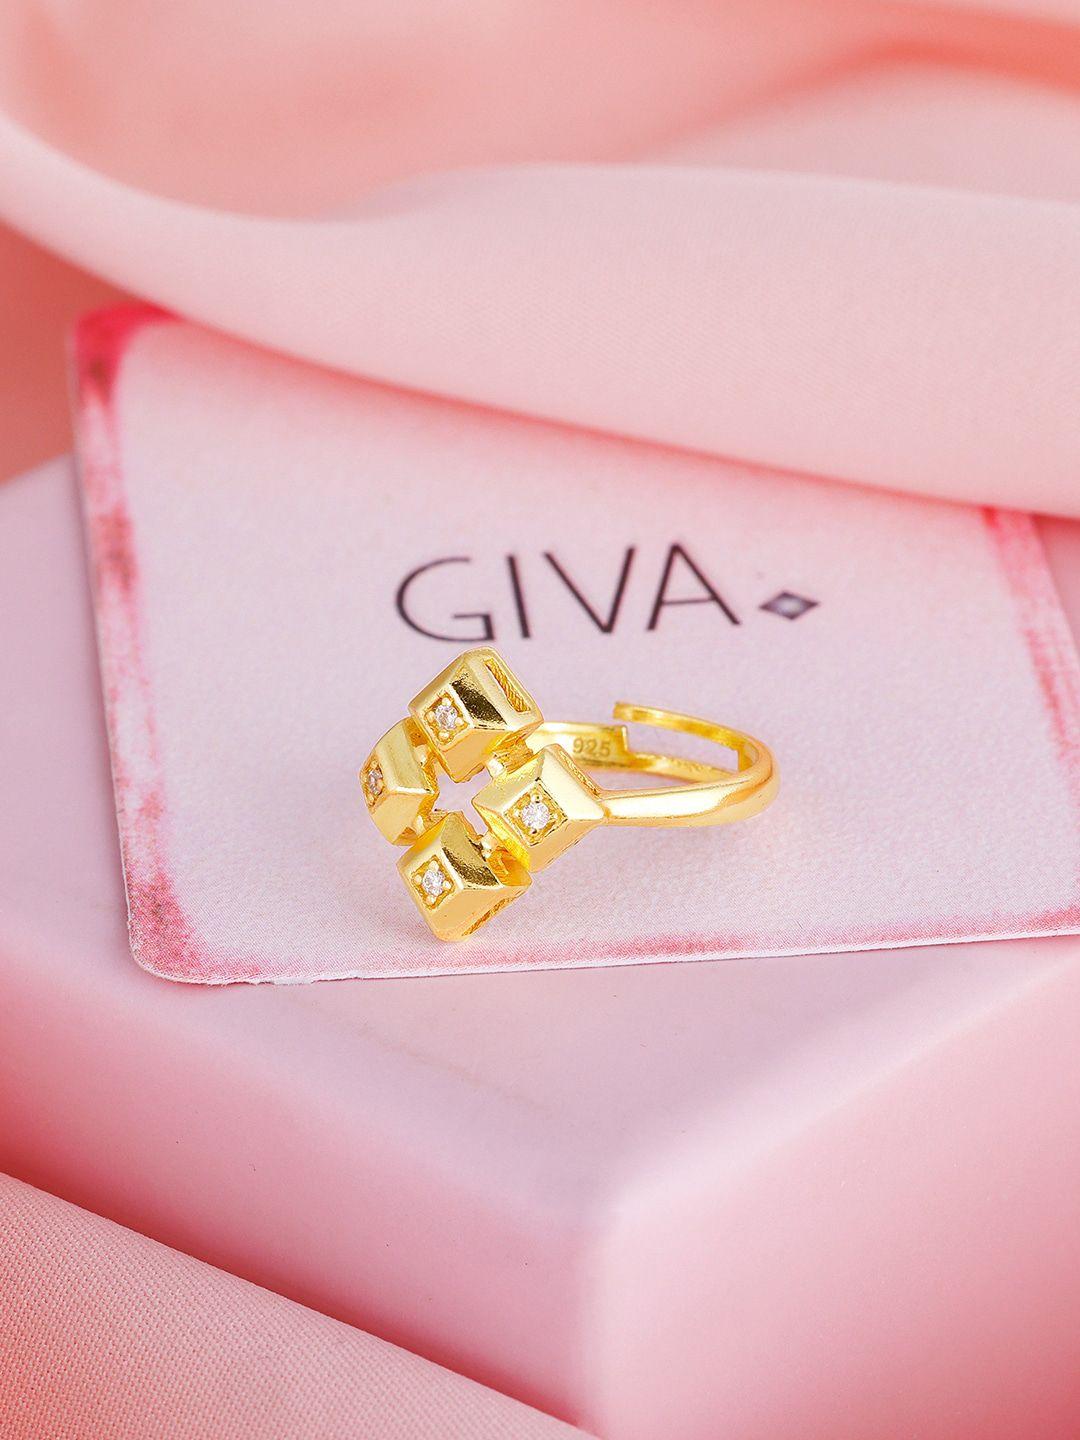 giva 925 sterling silver gold-plated & zircons studded adjustable finger ring